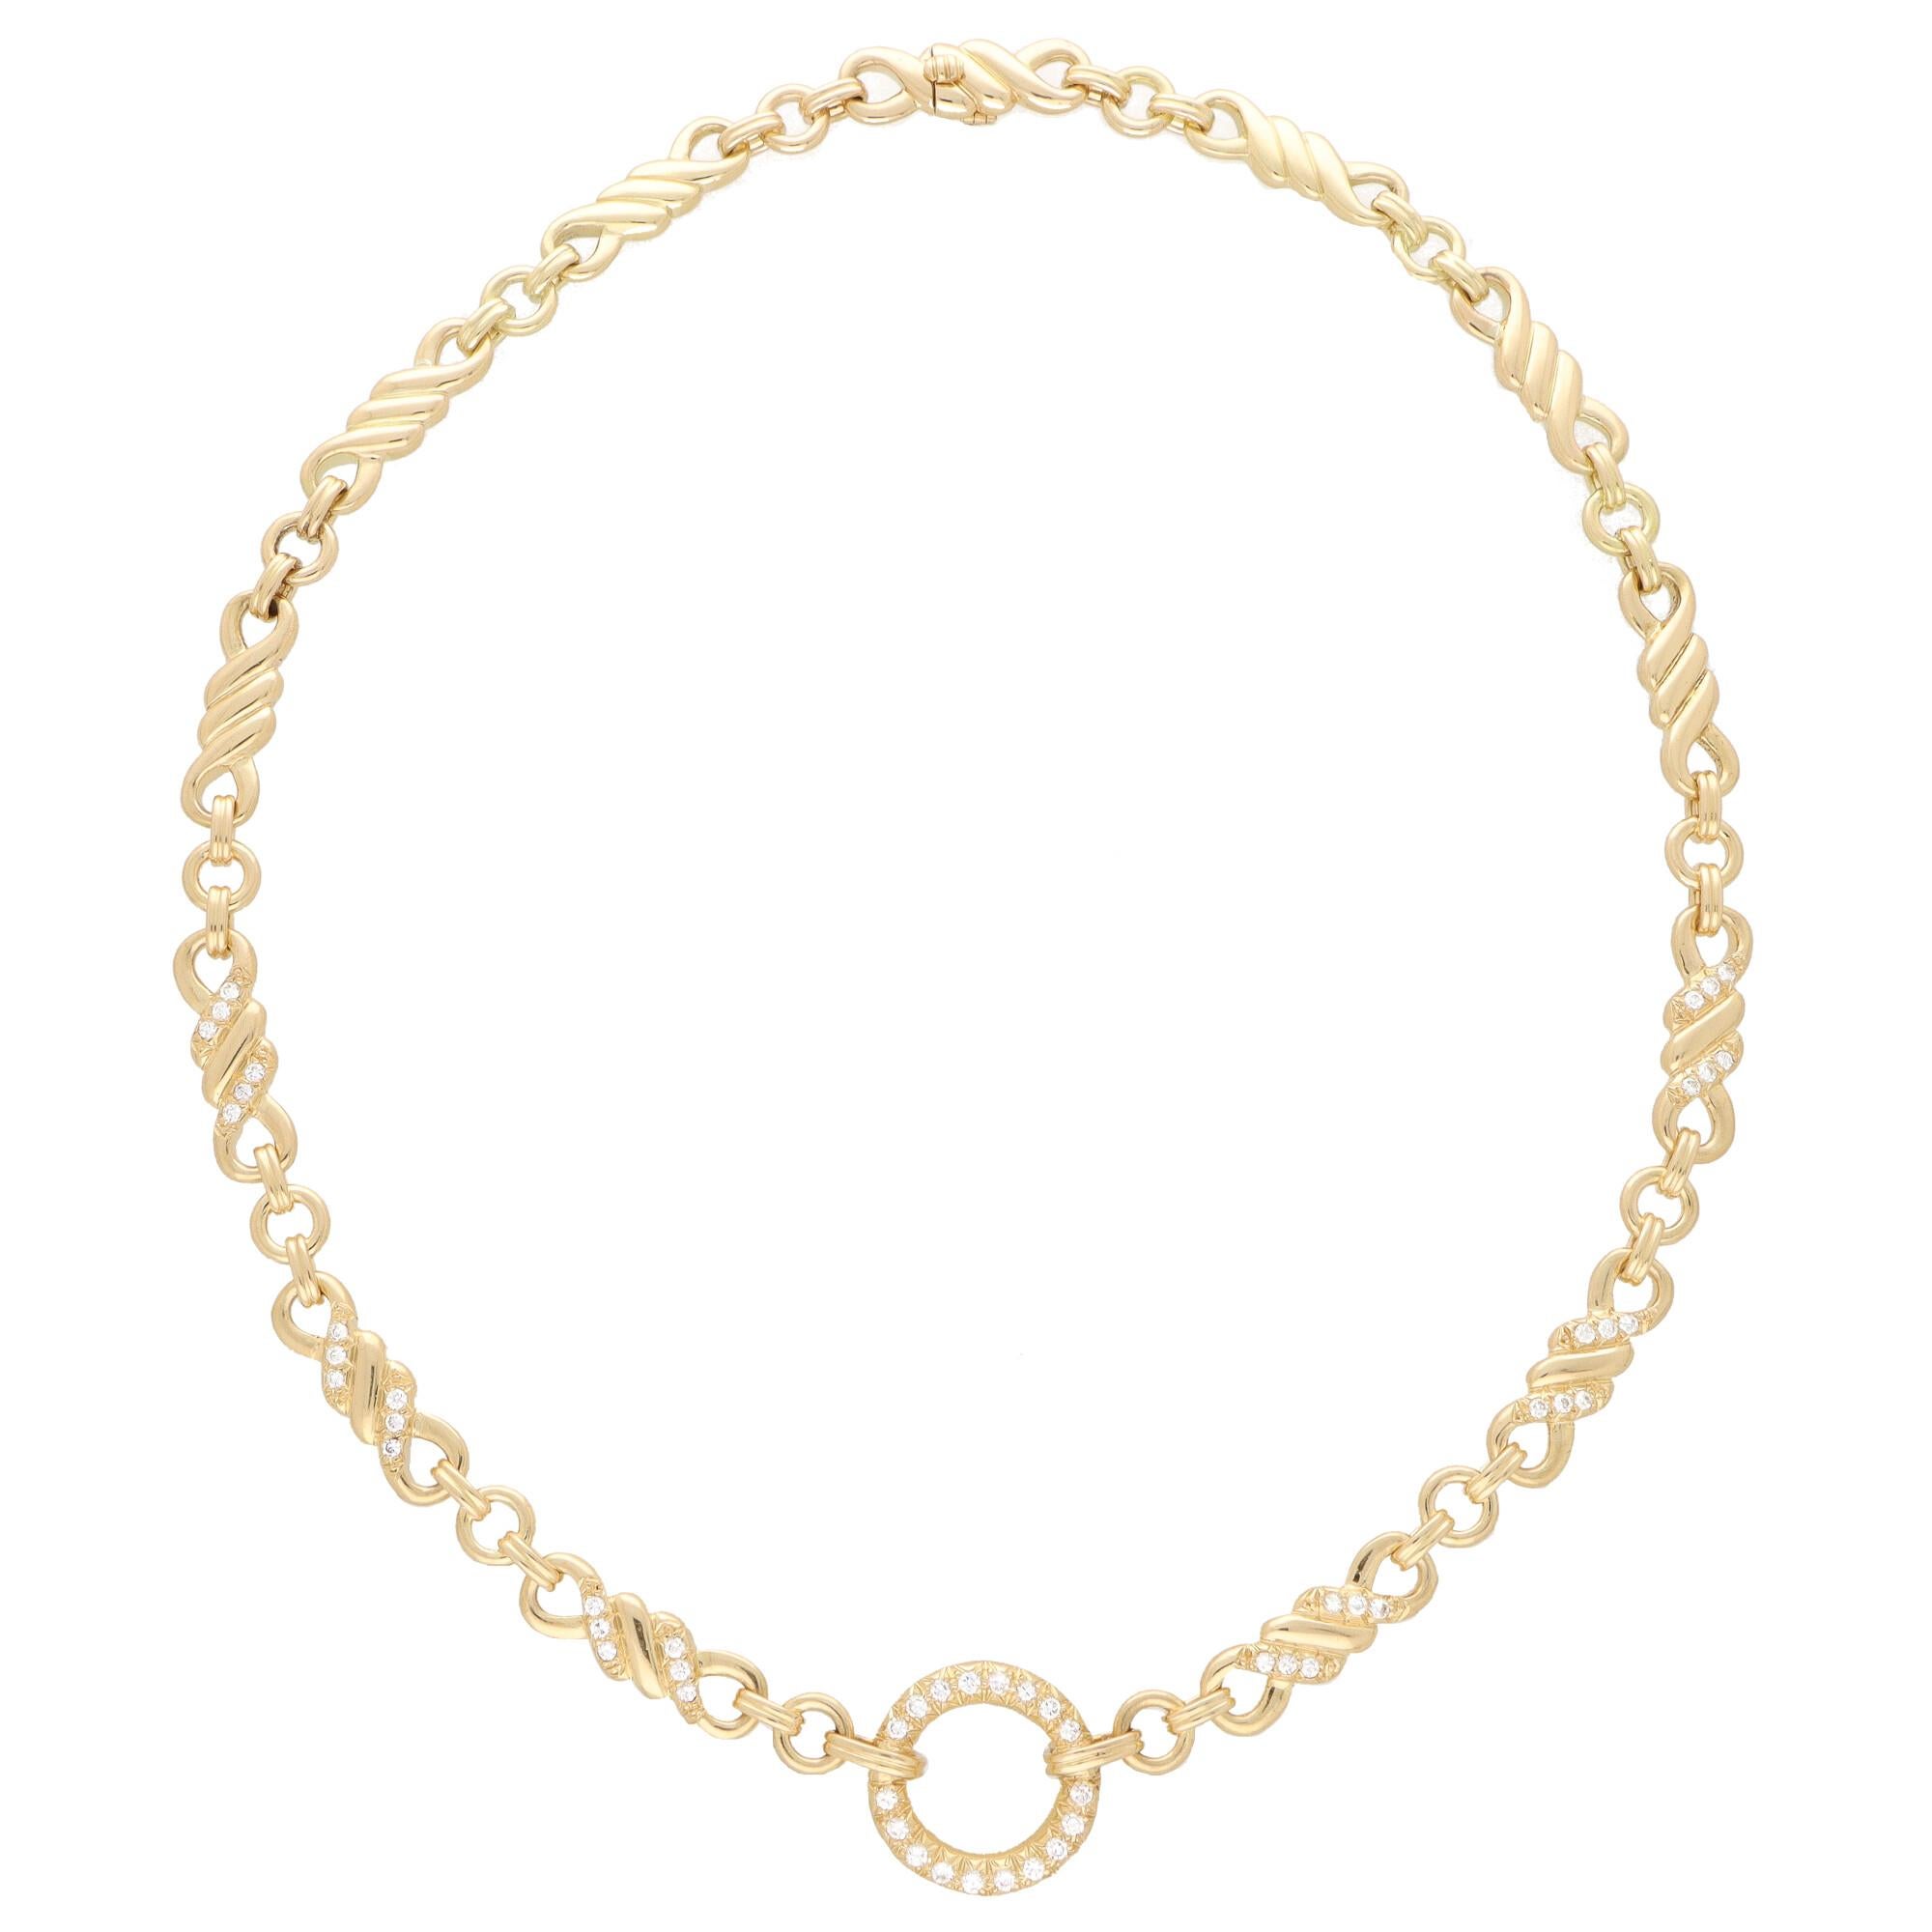 Retro Vintage Hermès Diamond Infinity Circle Necklace Set in 18k Yellow Gold